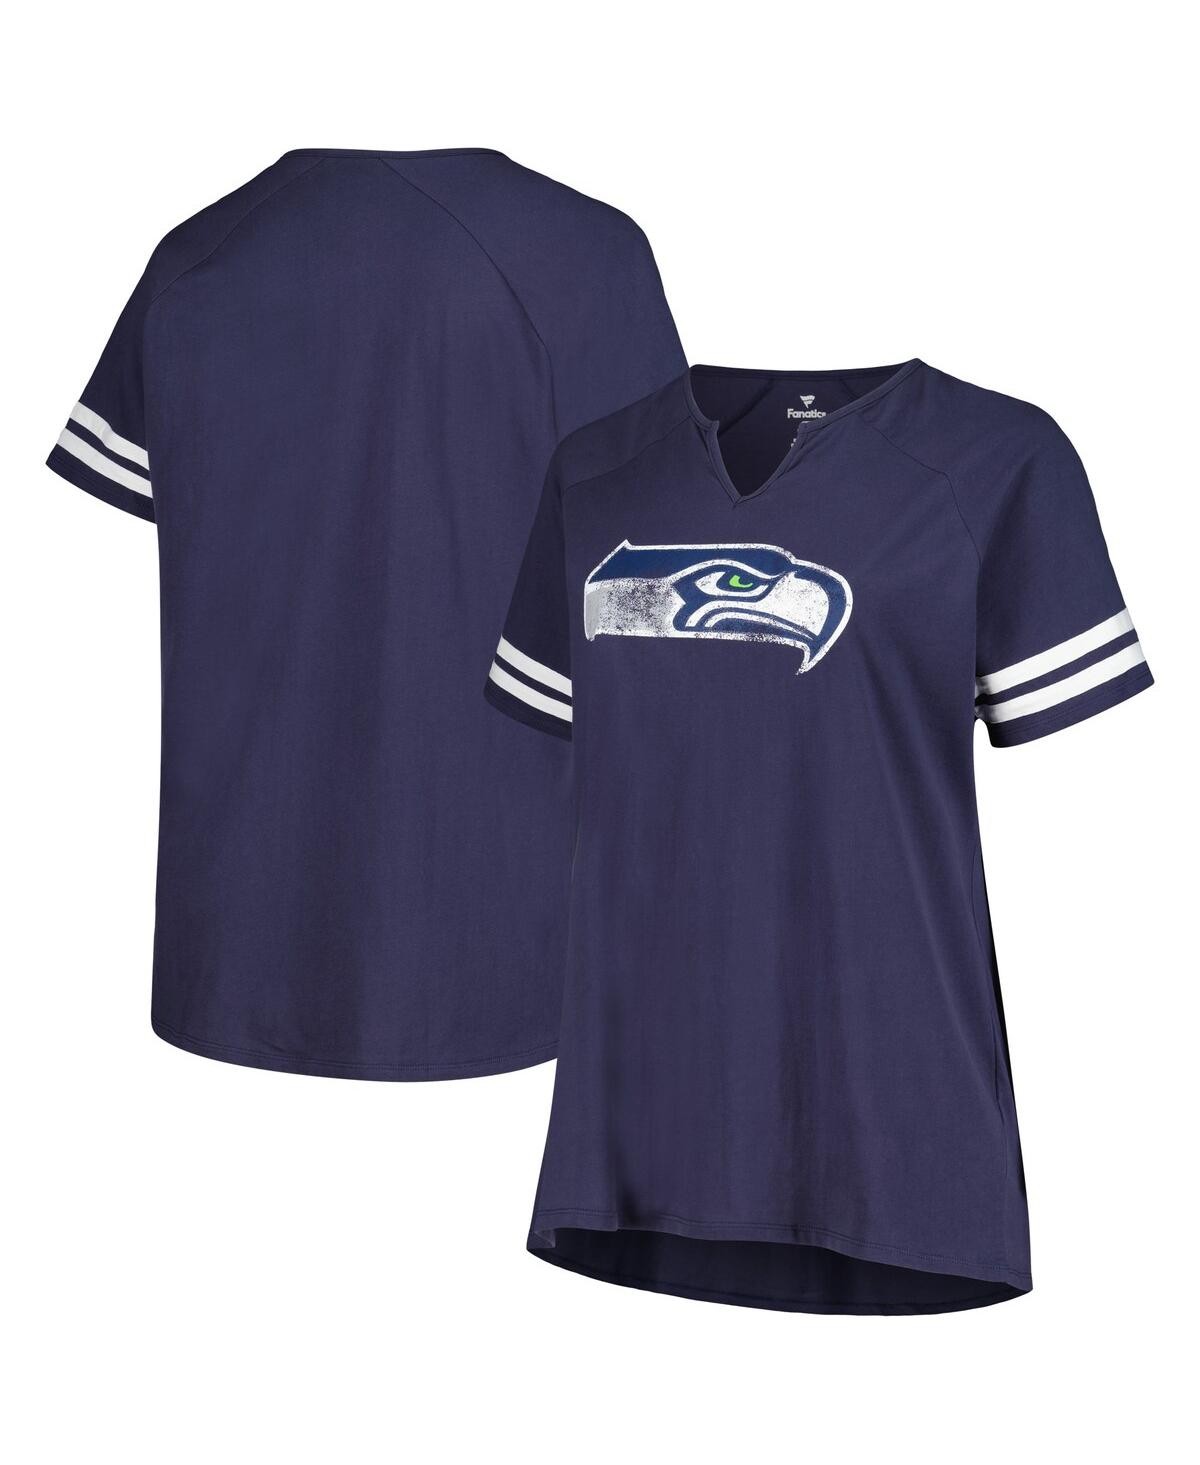 Shop Fanatics Women's  Navy Distressed Seattle Seahawks Plus Size Raglan Notch Neck T-shirt